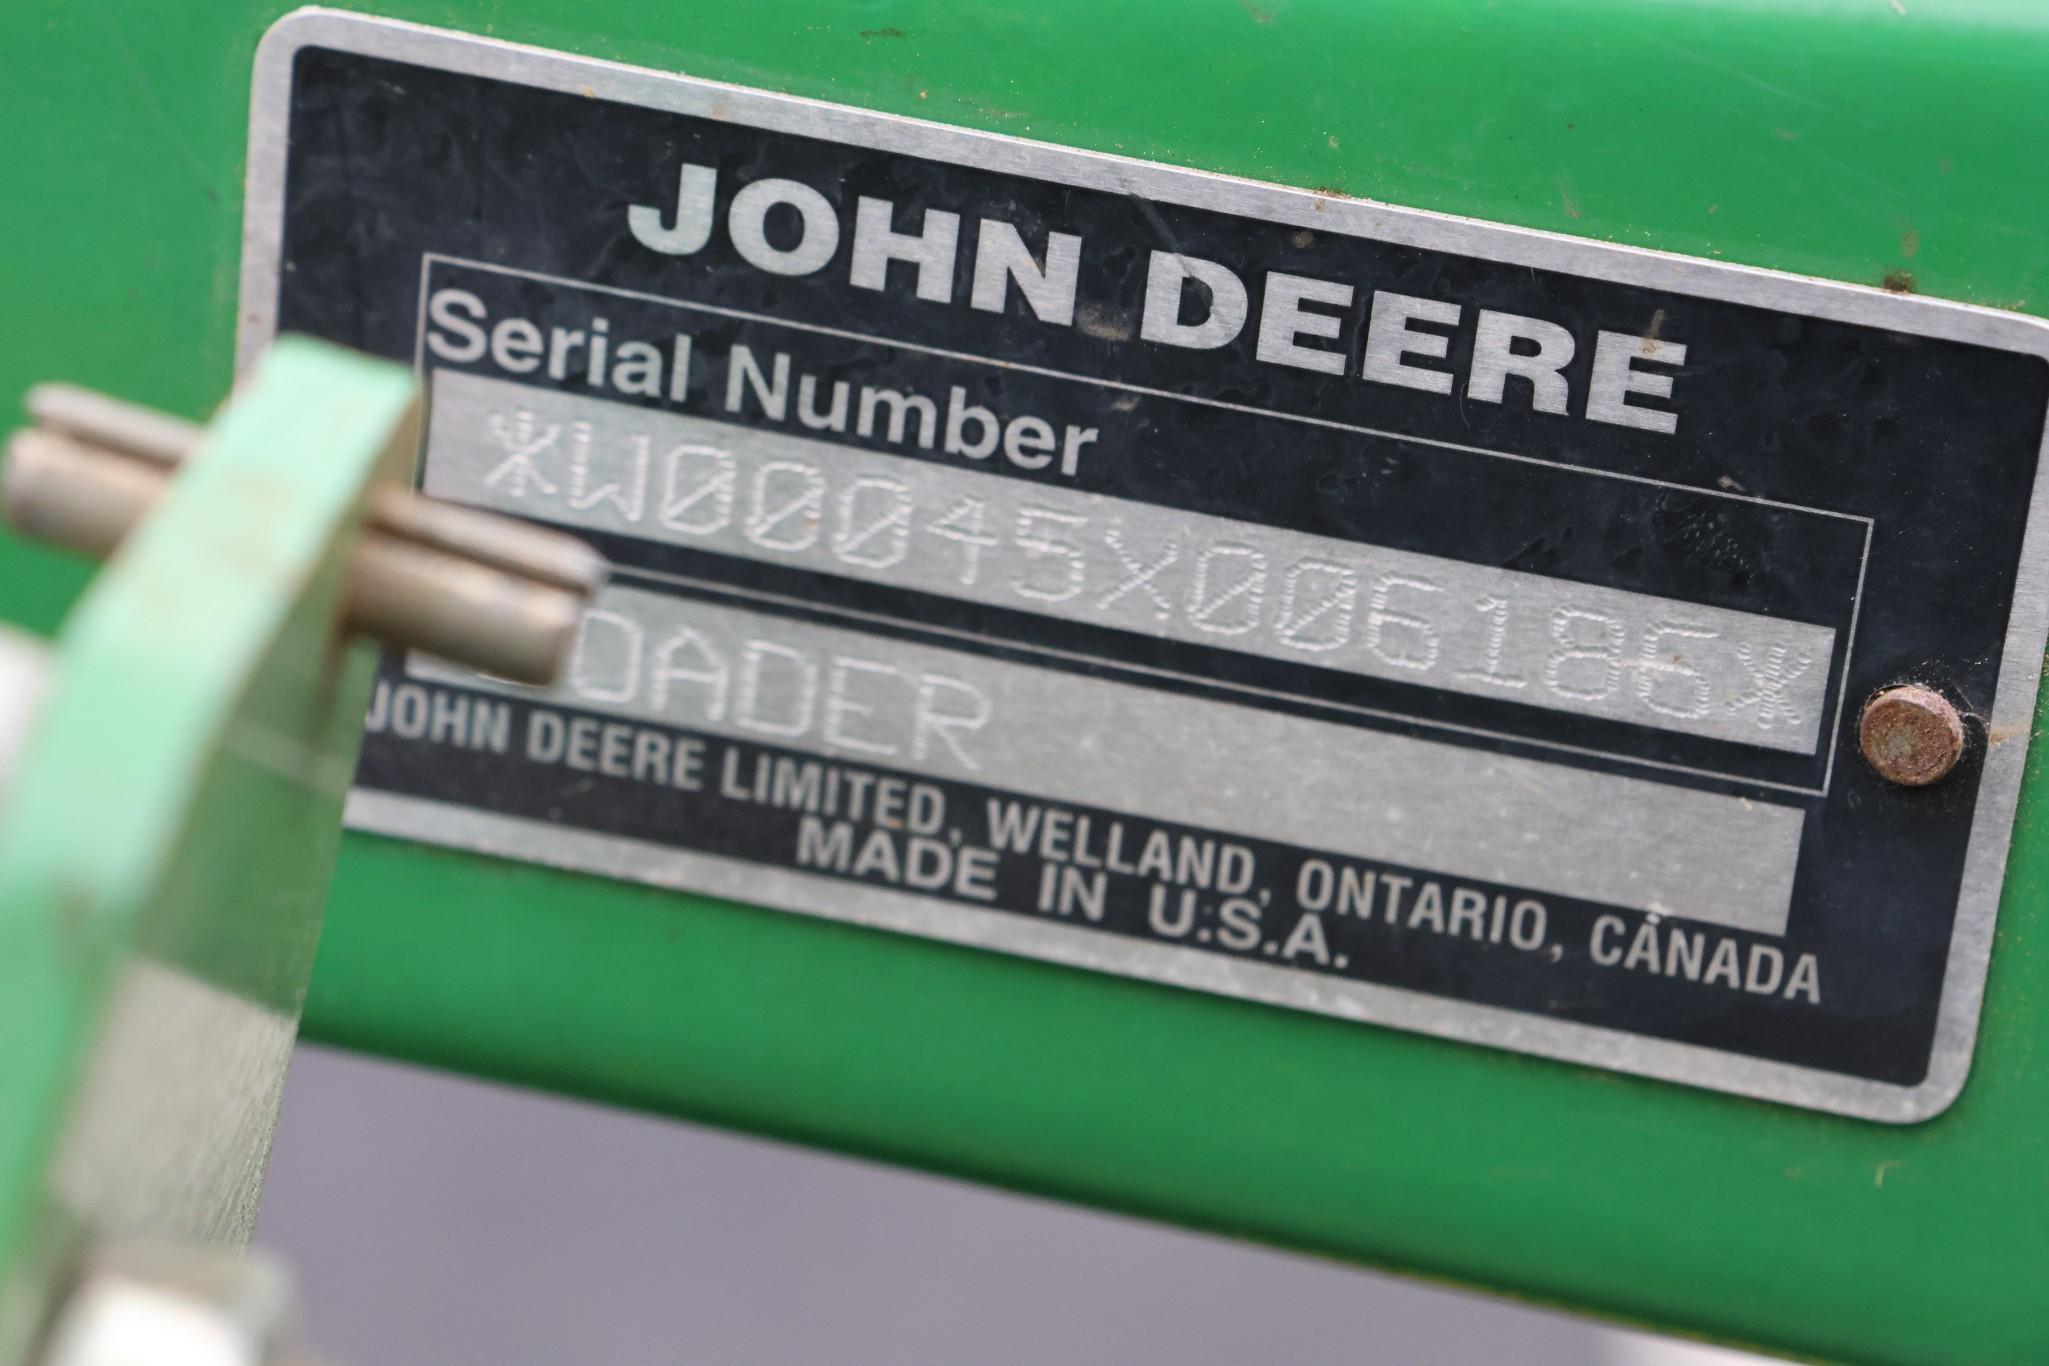 2006 John Deere x728 Ultimate W/45 Loader